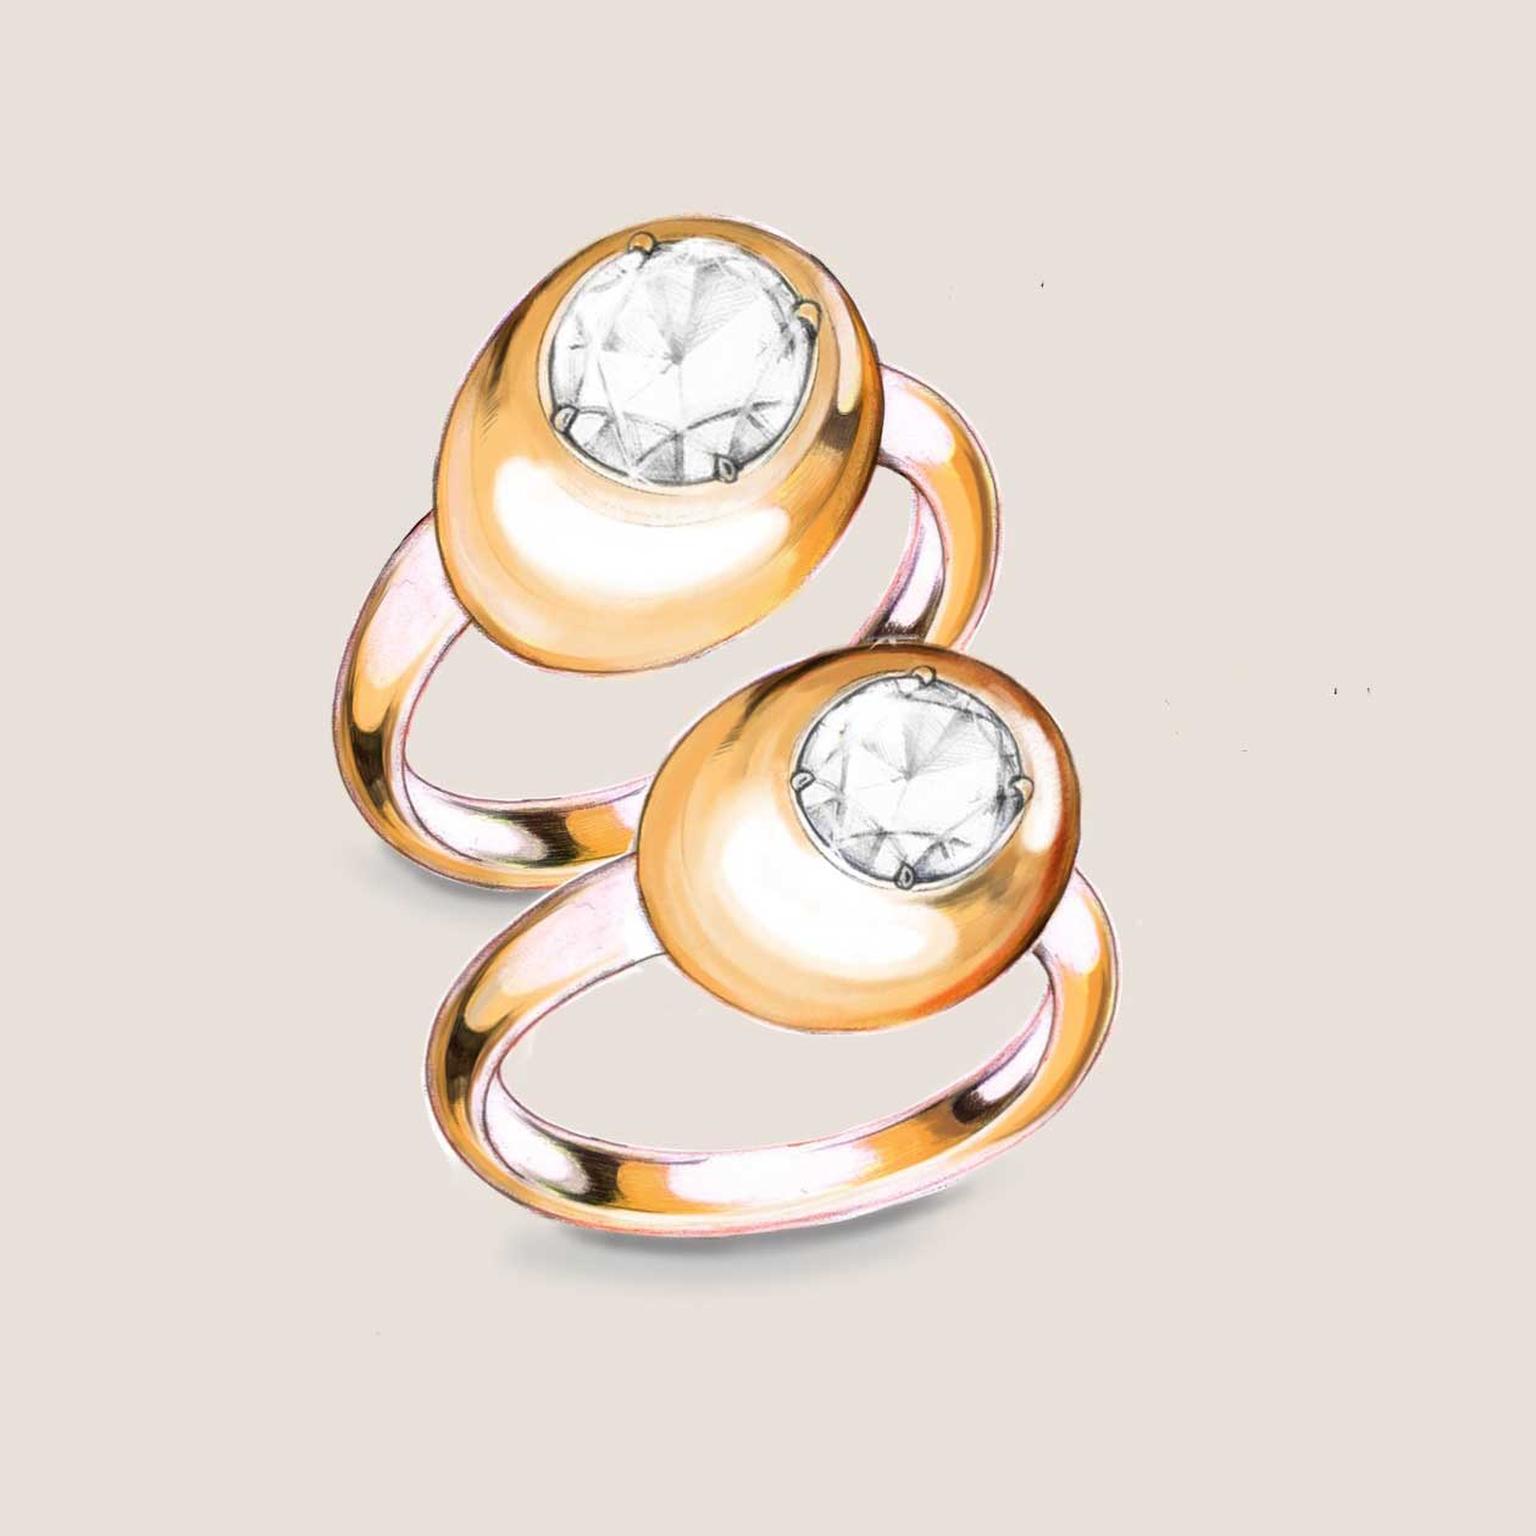 Pomellato Nuvola diamond ring sketches 